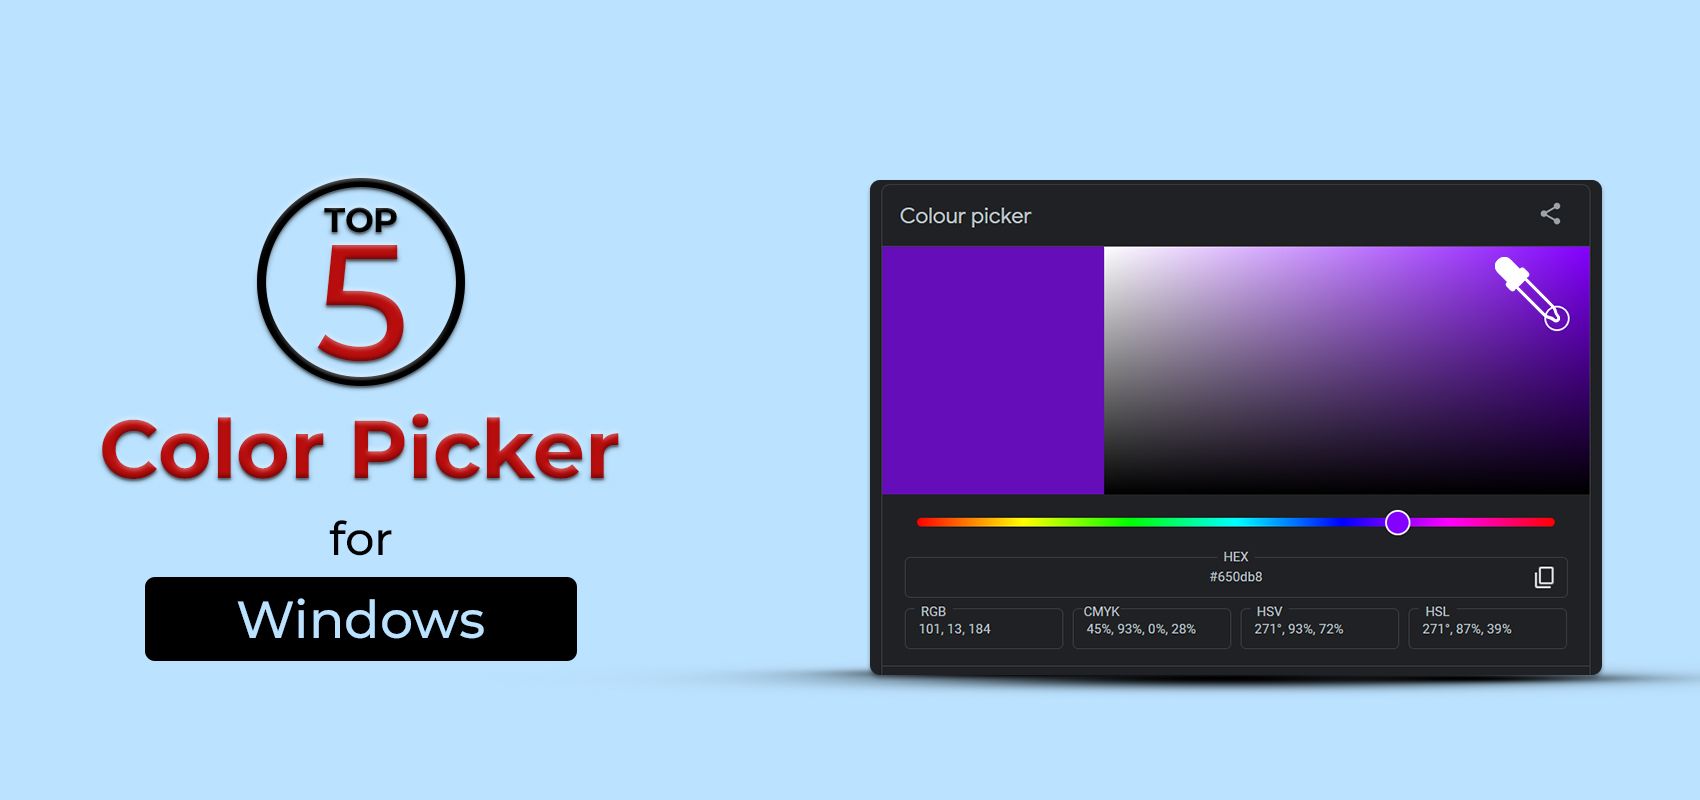 Top 5 Color Picker for Windows